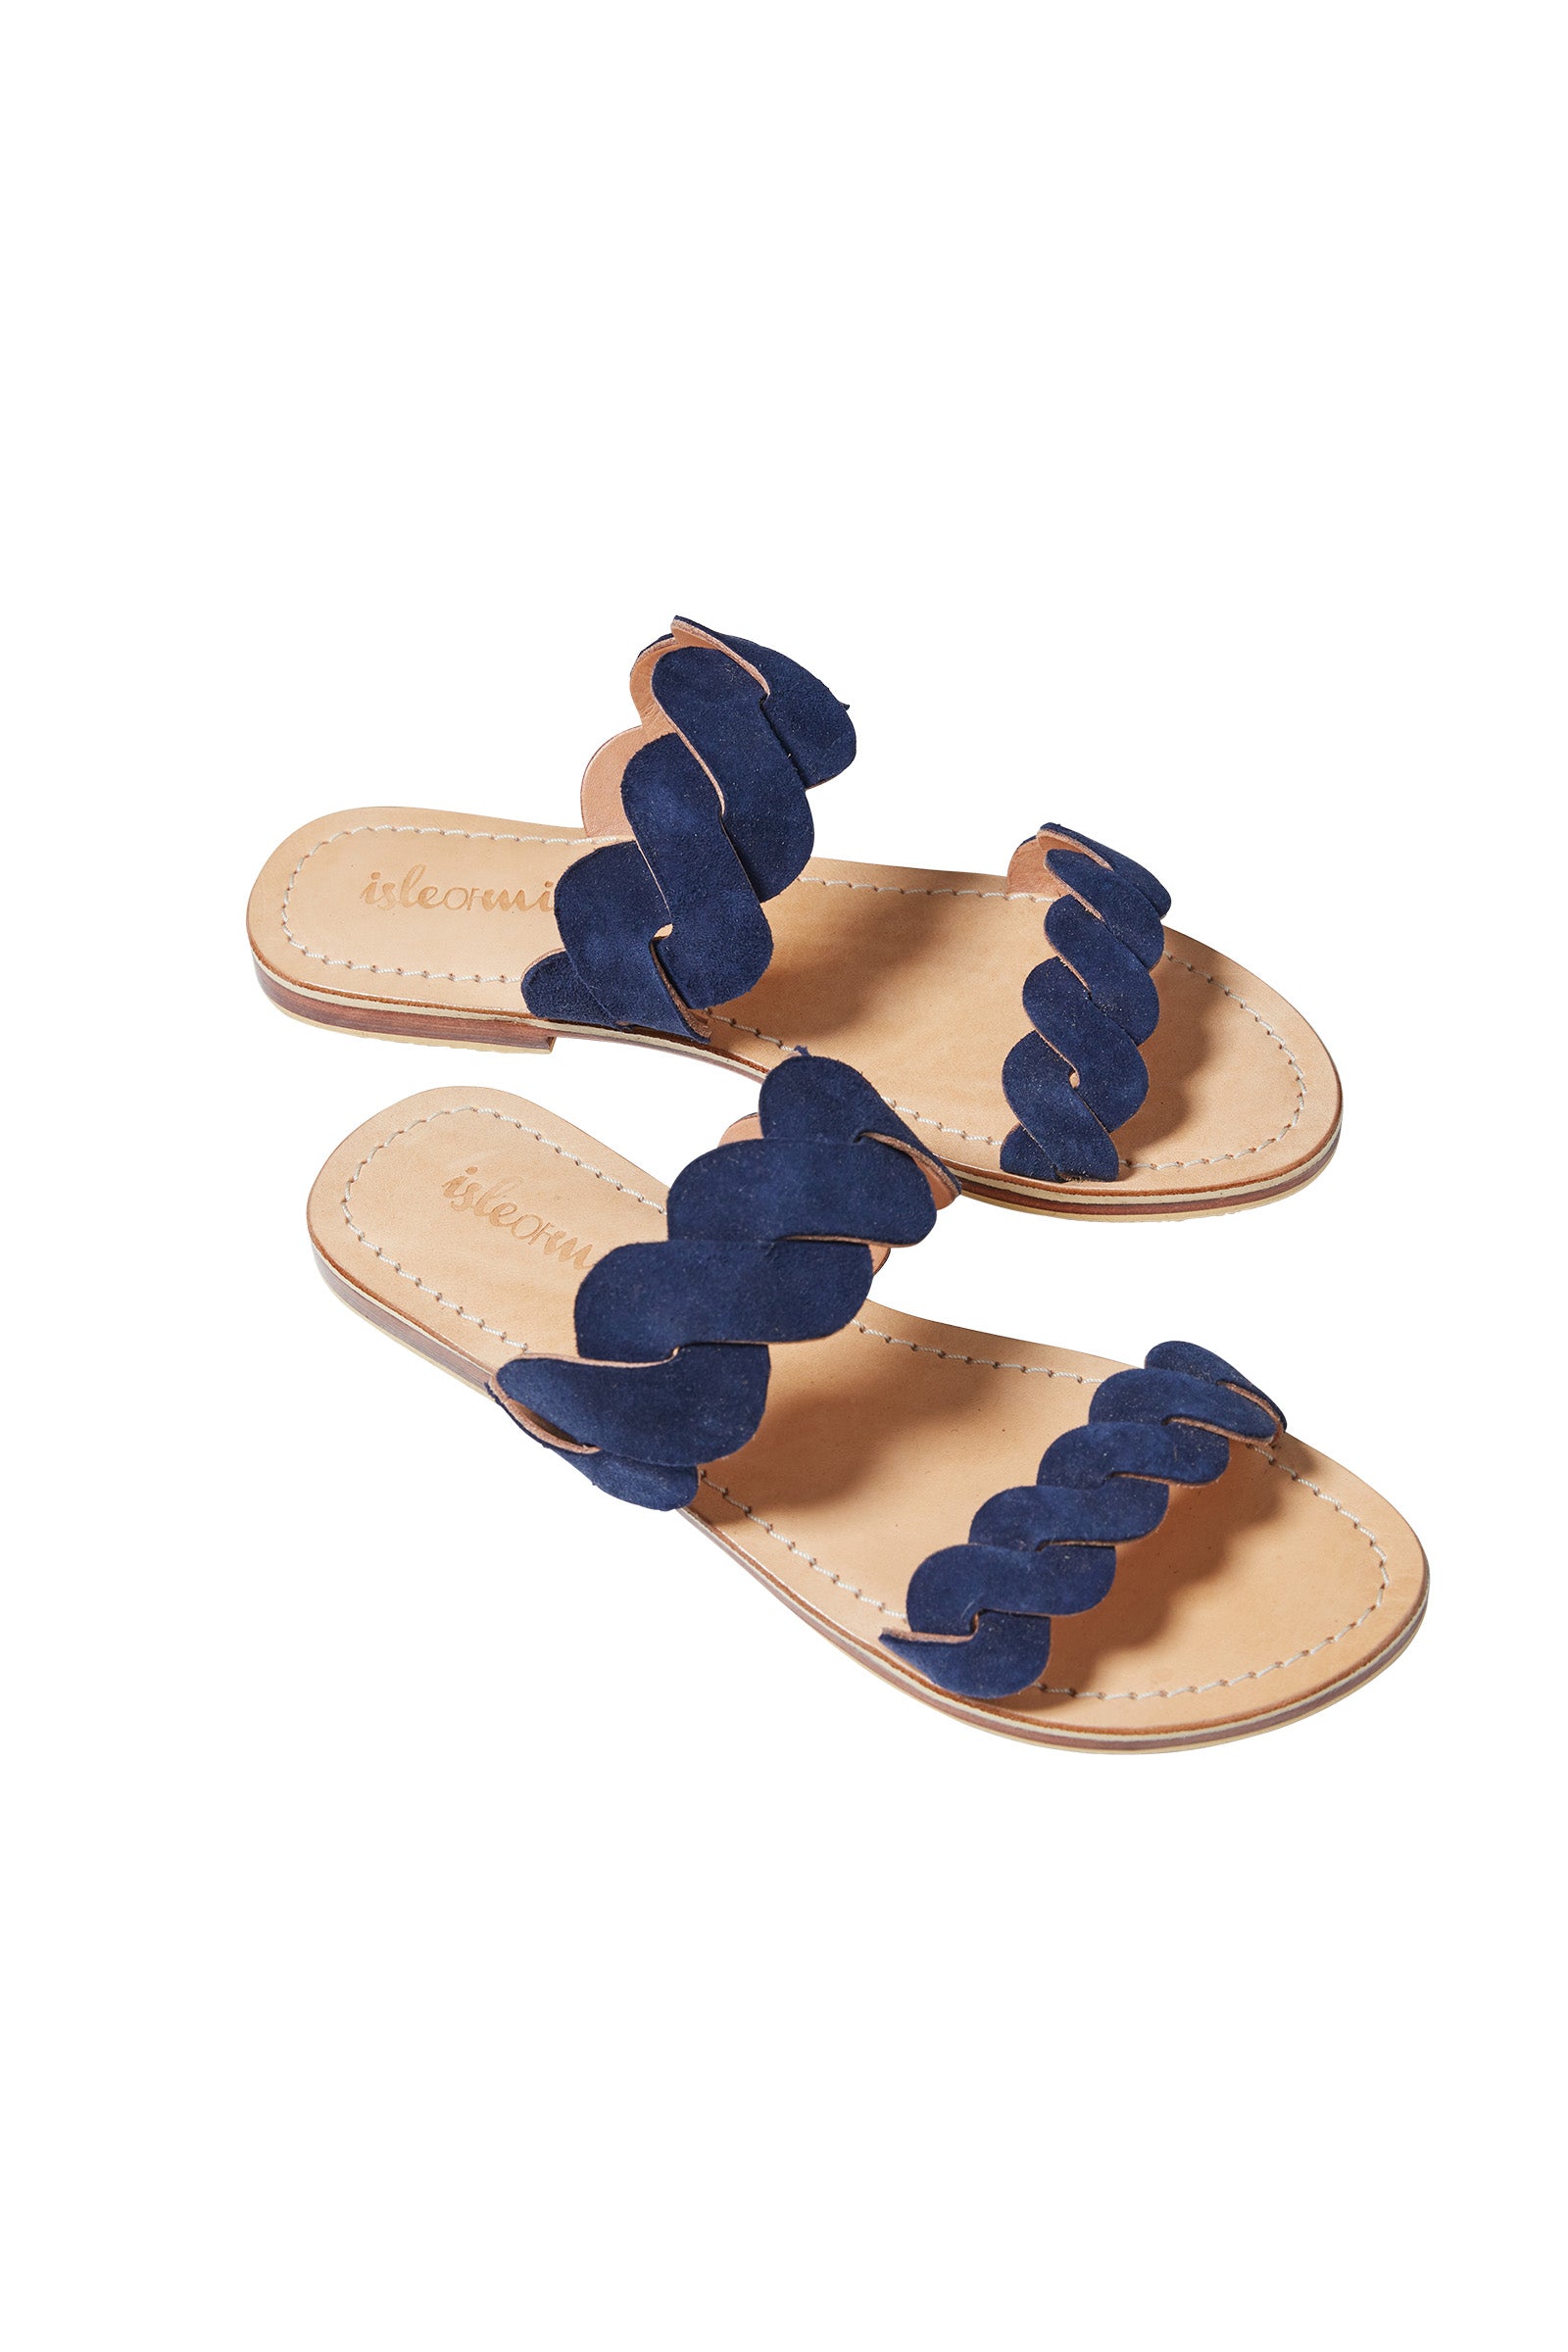 Pala Slide - Navy - Isle of Mine Footwear - Sandals